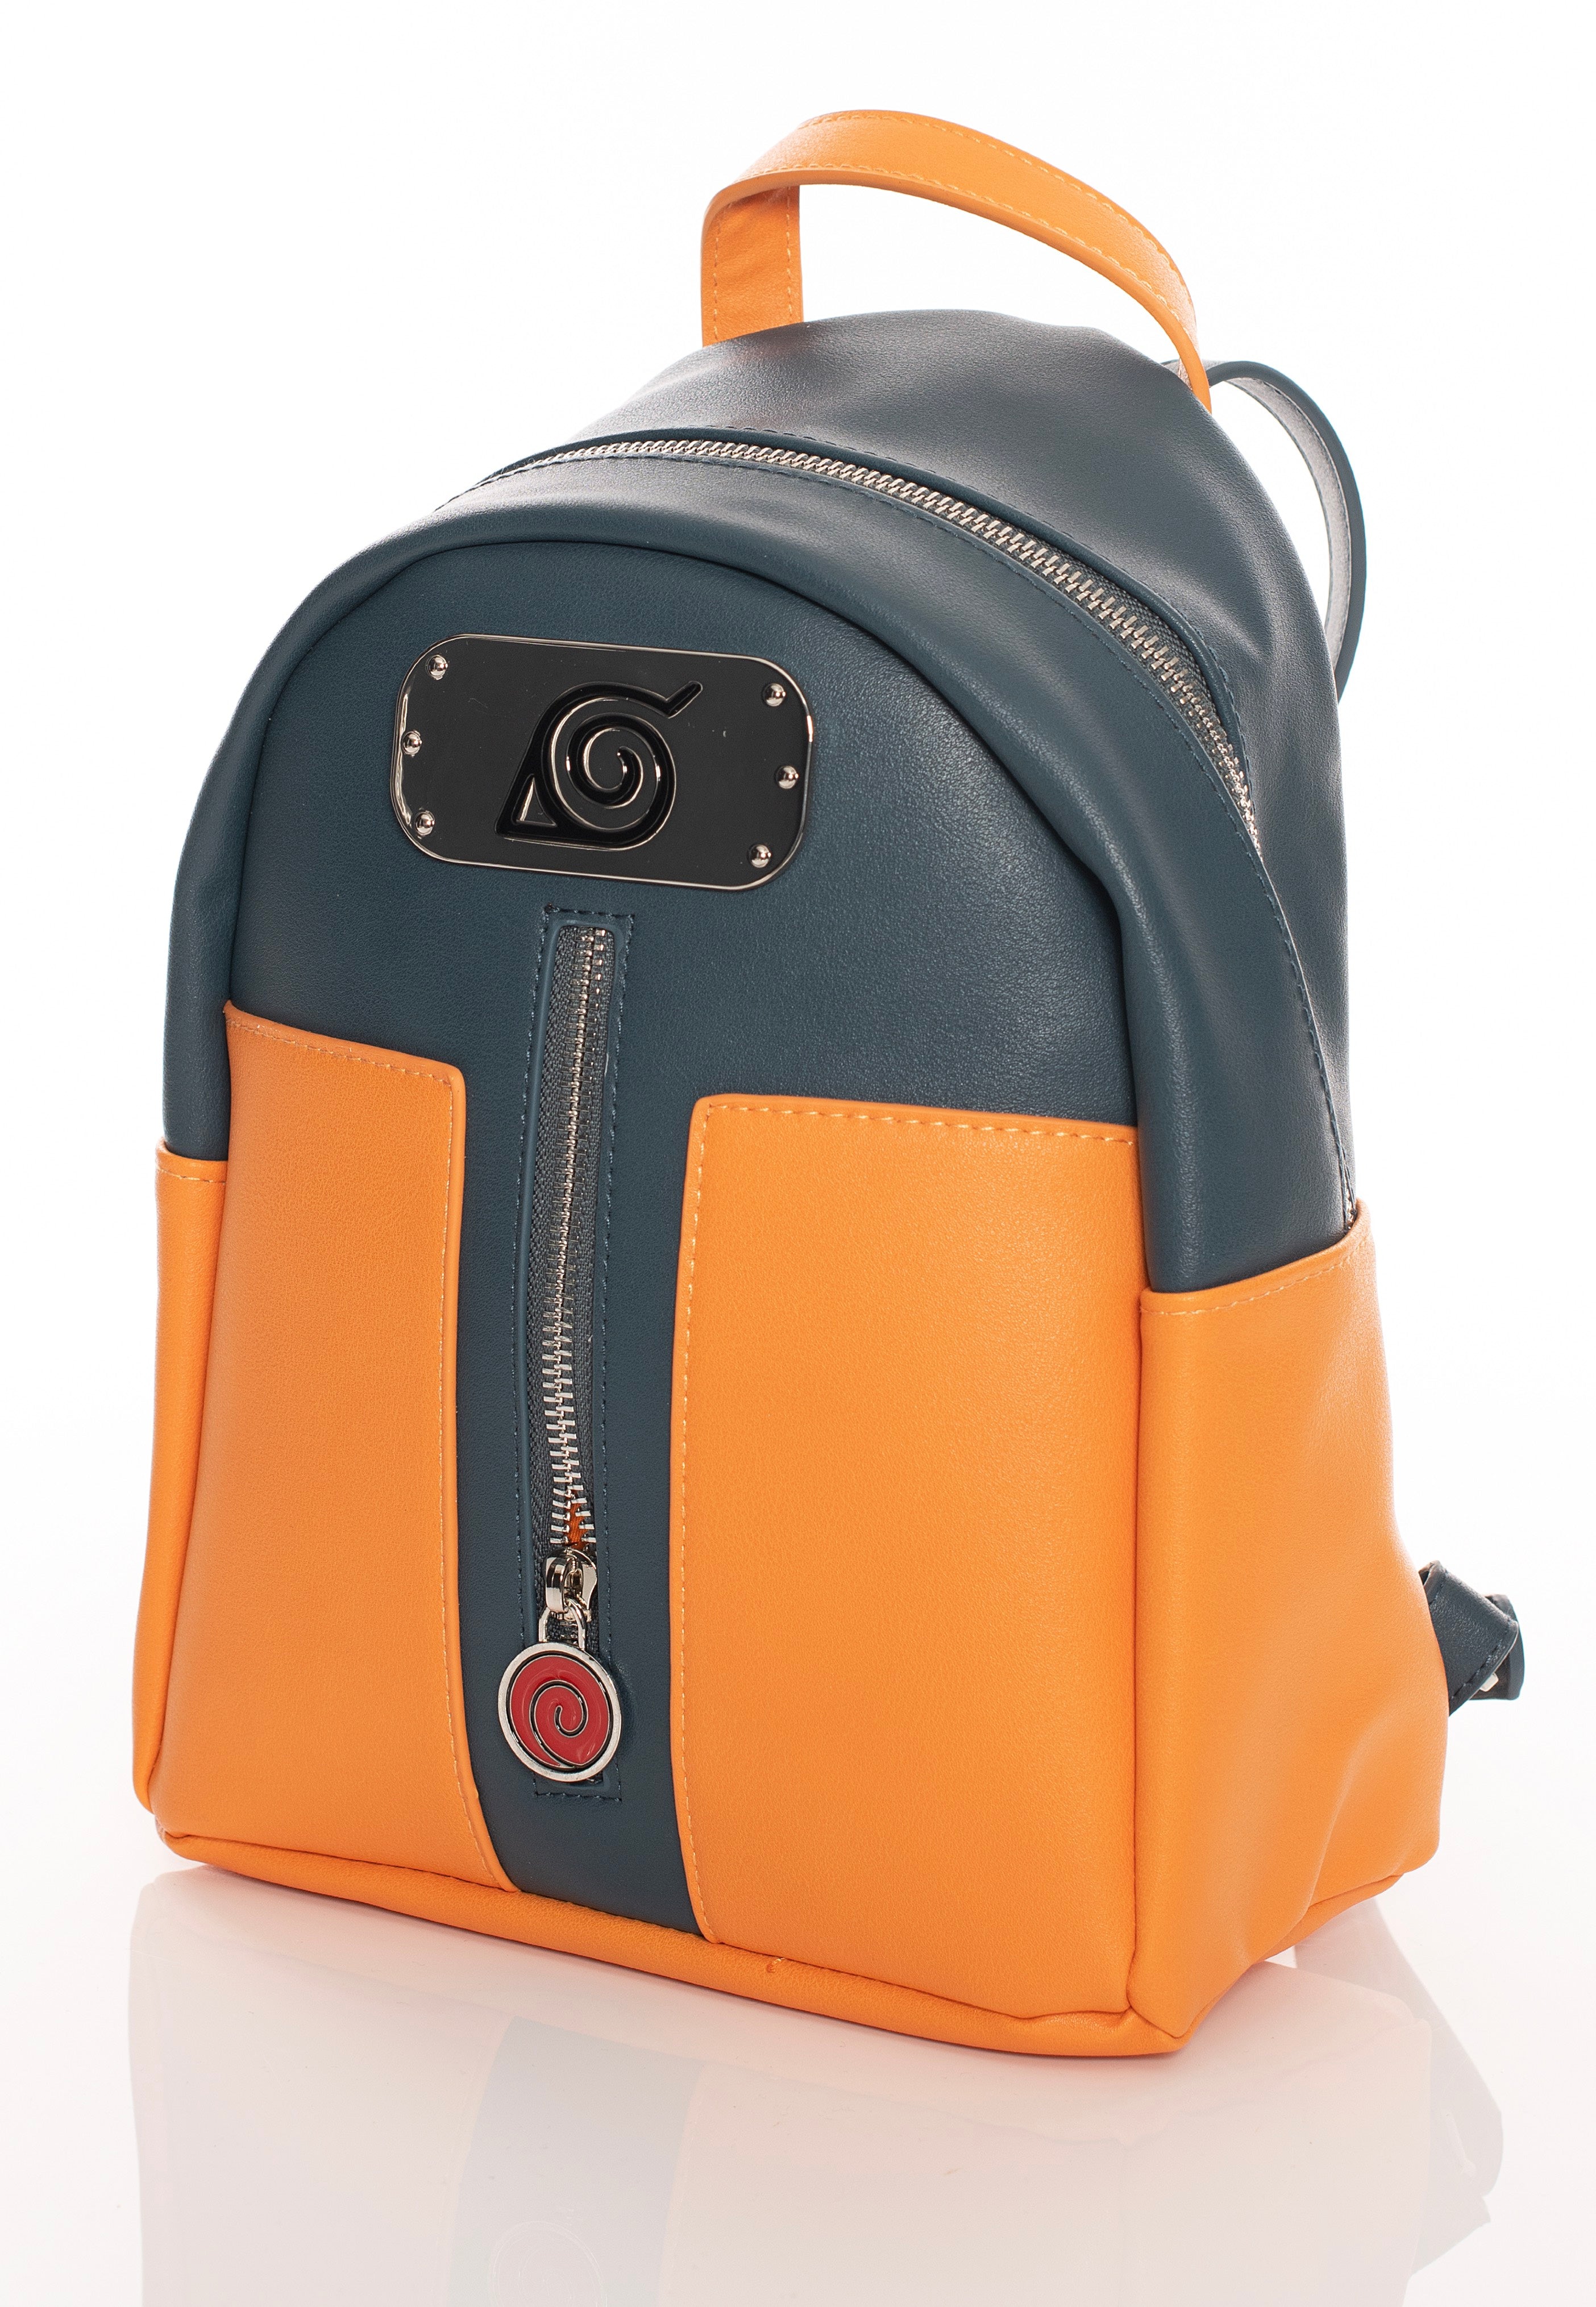 Difuzed Naruto Premium Backpack, gray